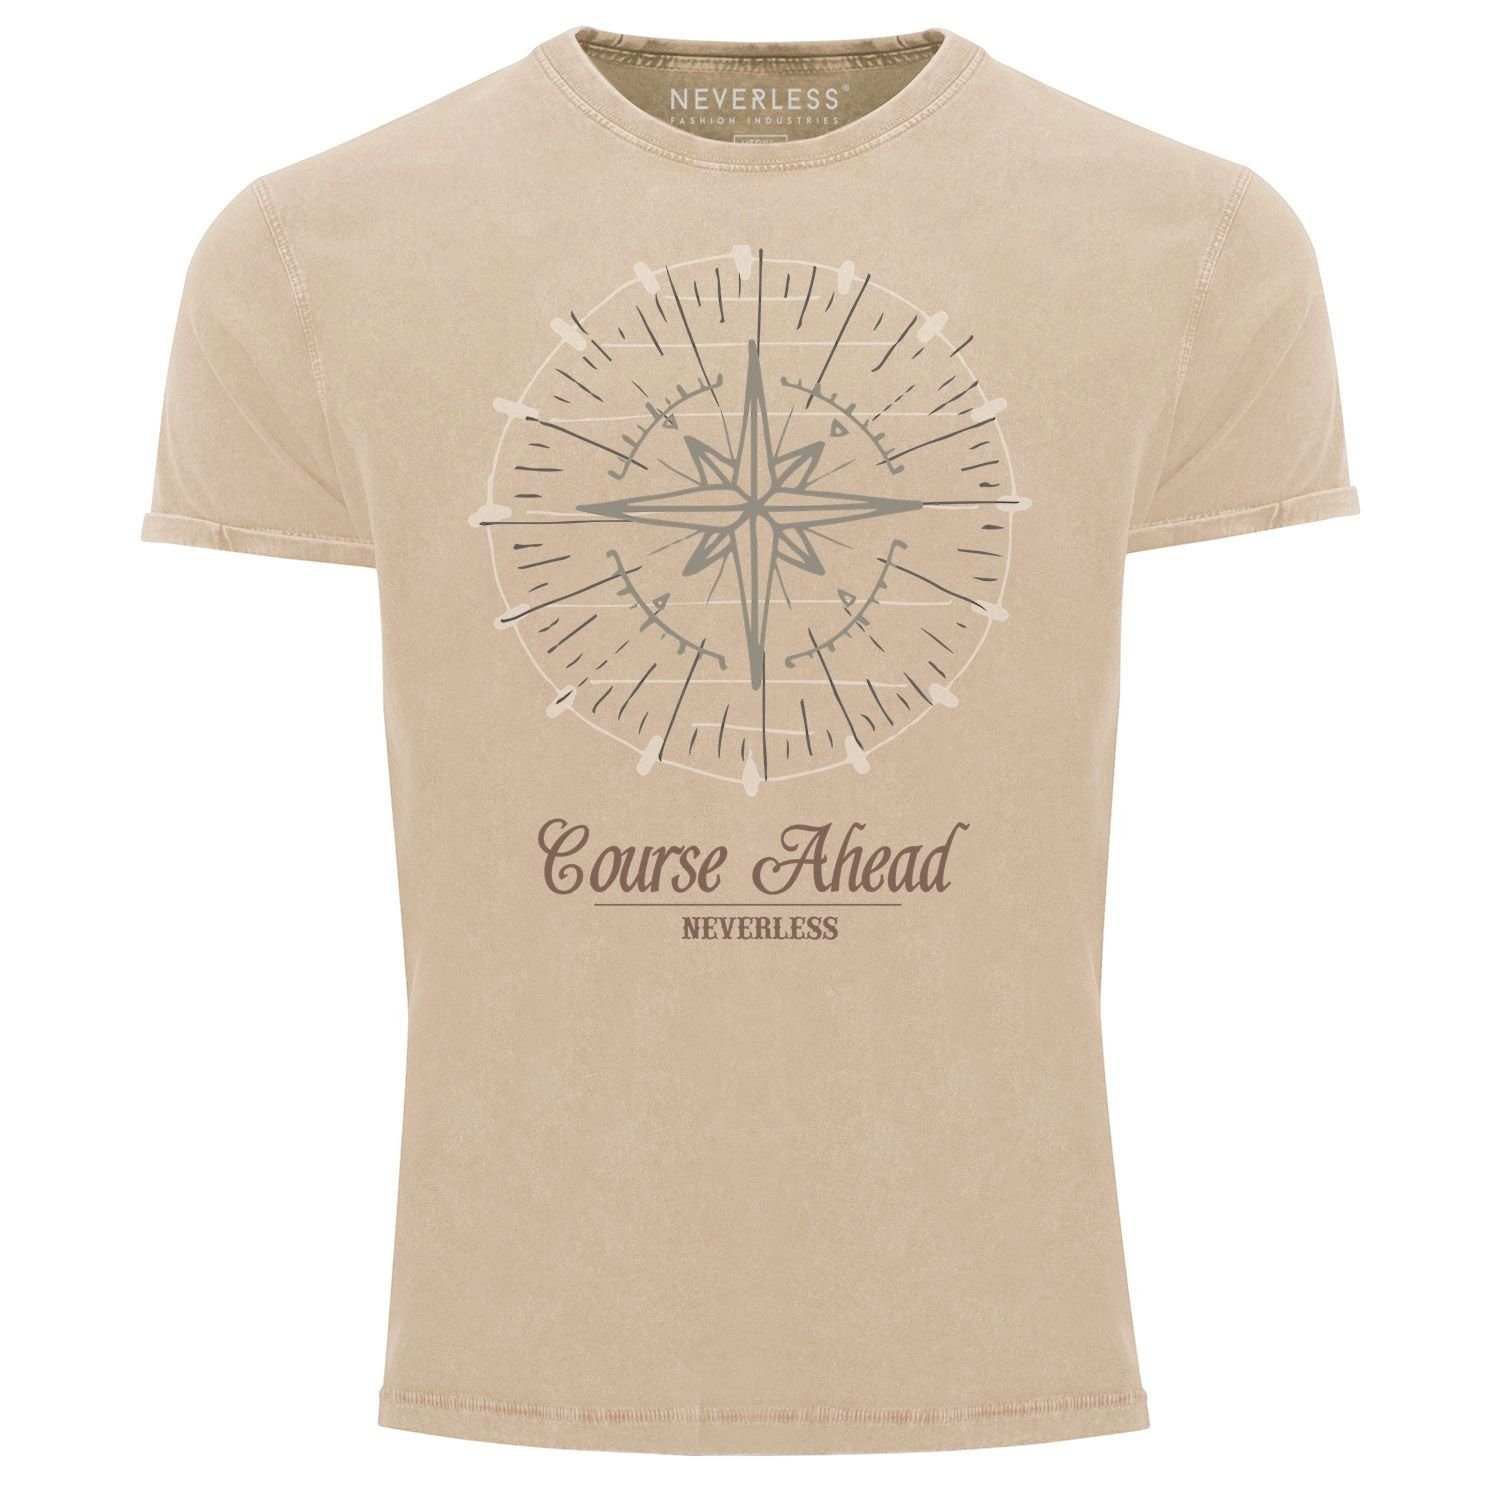 Neverless Print-Shirt Cooles angesagtes Herren T-Shirt Vintage Shirt Kompass Windrose Aufdruck Used Look Slim Fit Neverless® mit Print natur